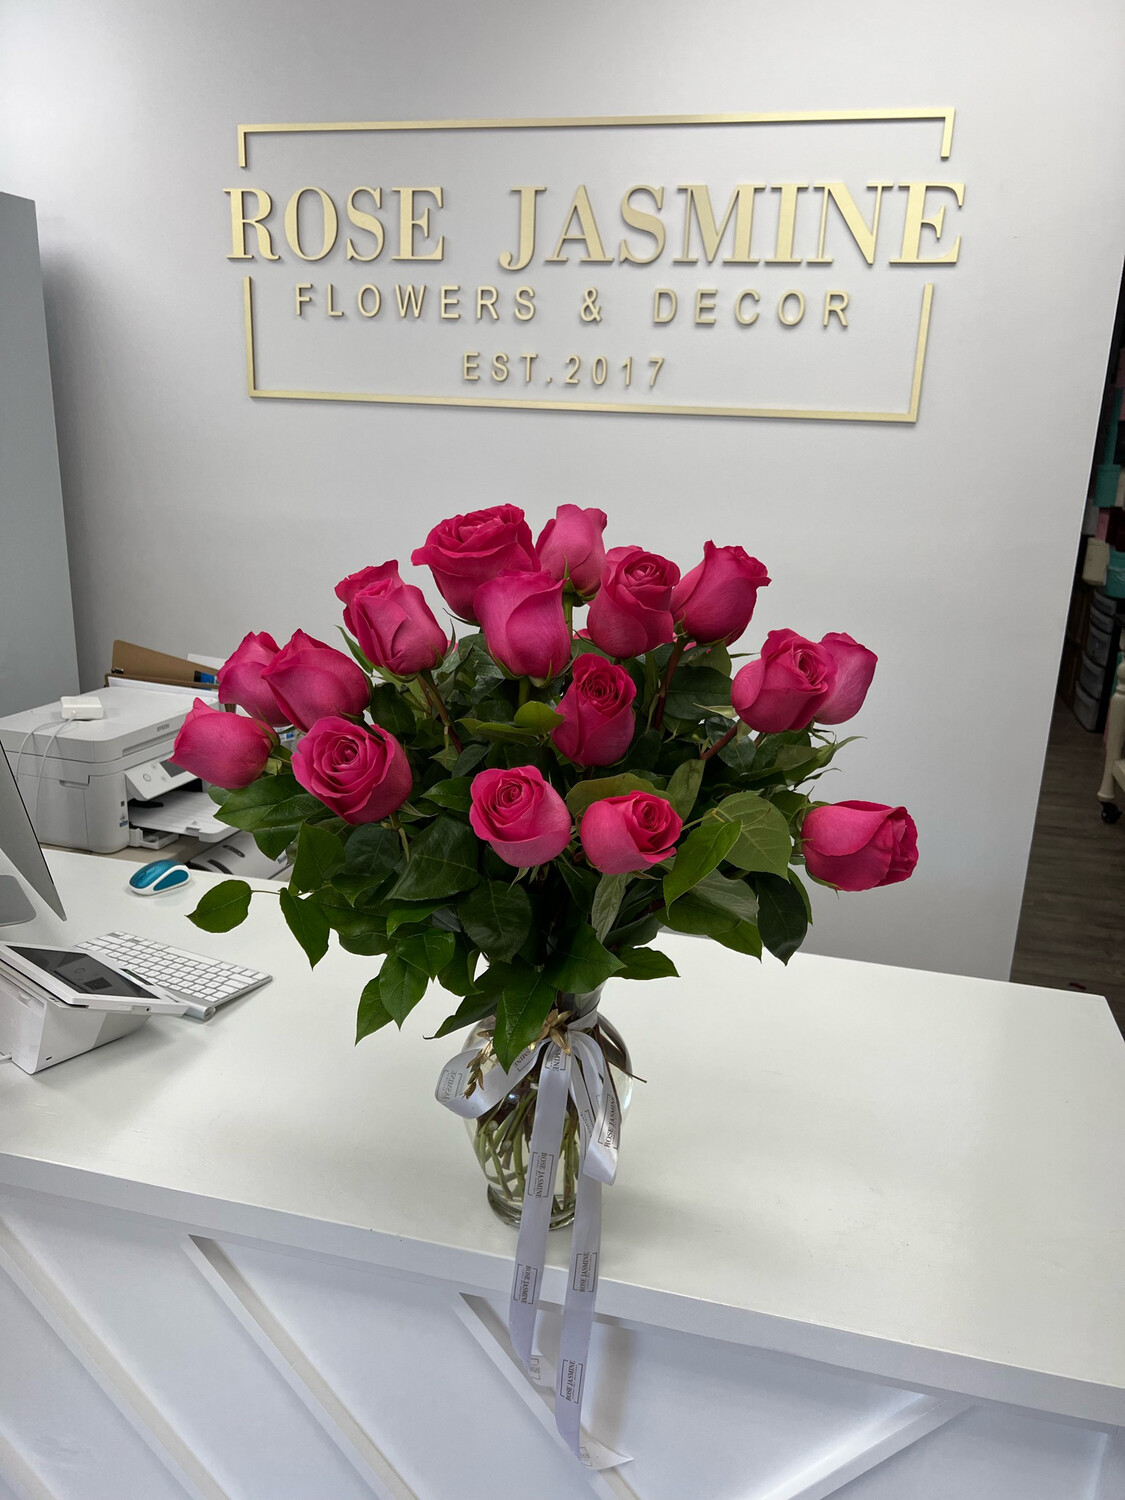 2-Dozen Premium Cut Roses In A Clear Vase